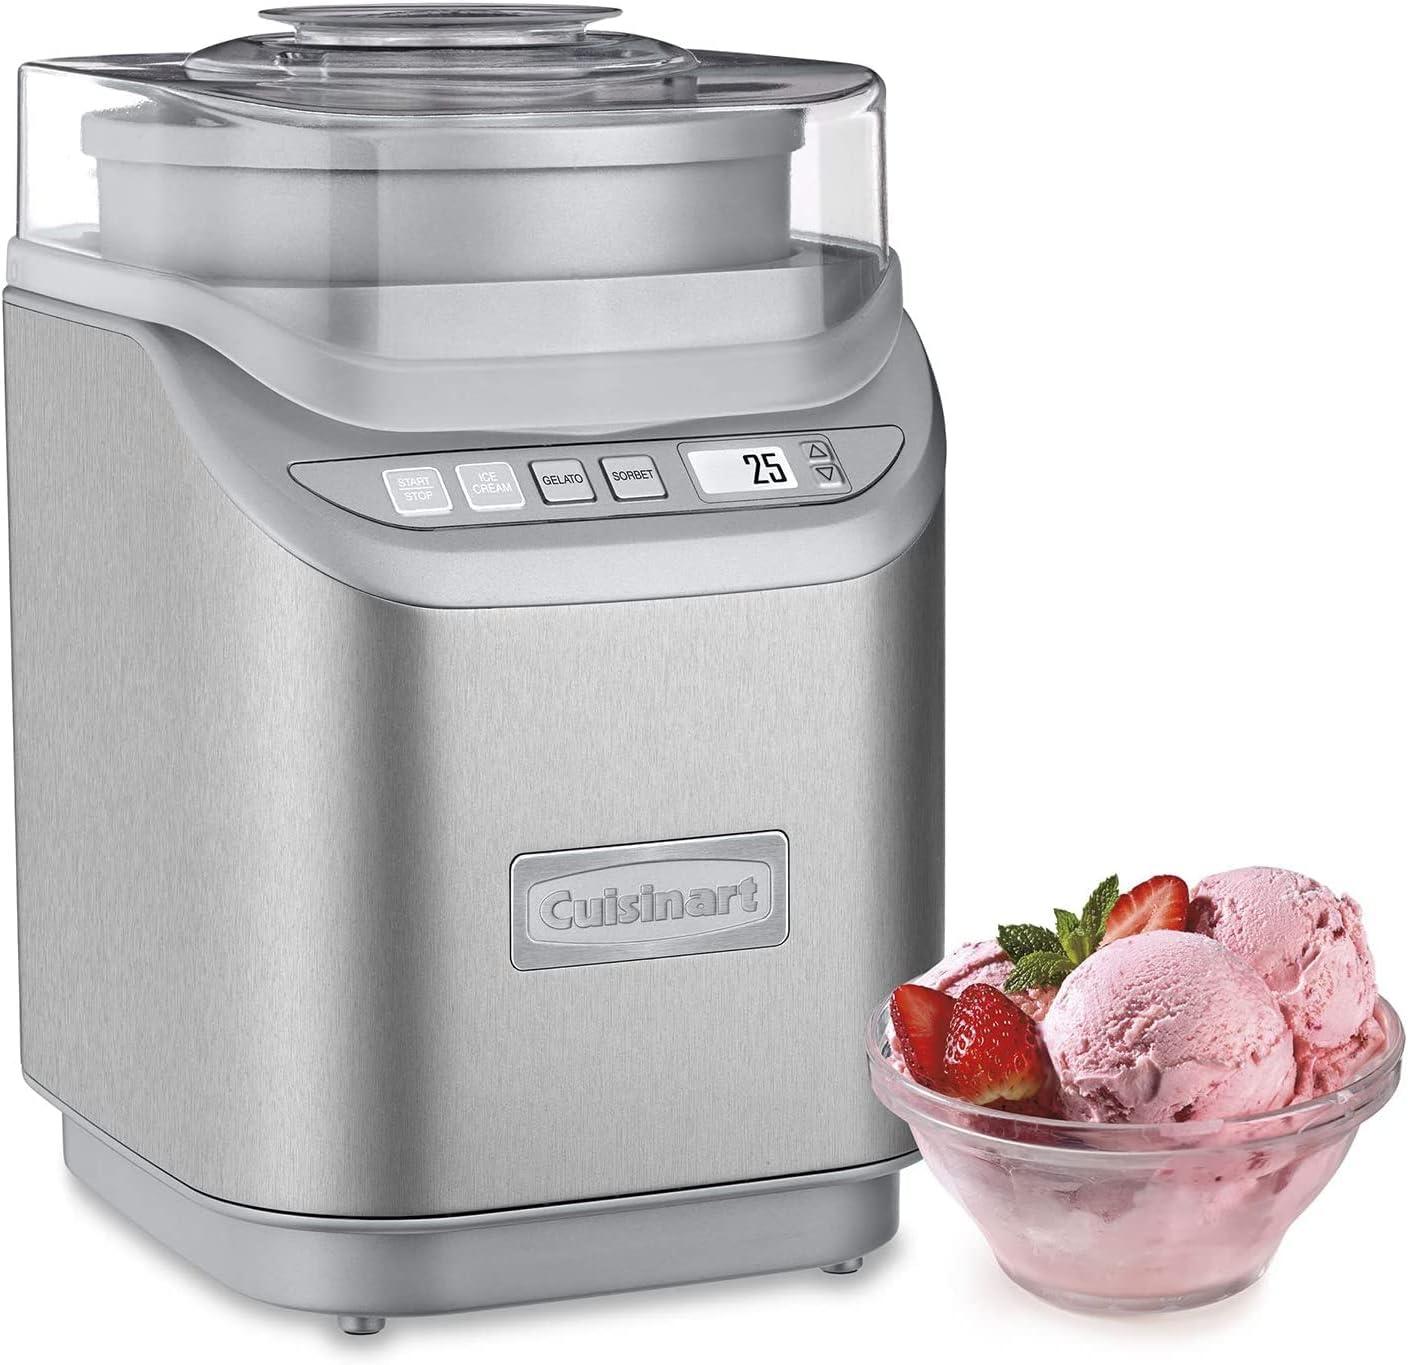 Cuisinart Ice Cream Maker 2Q Machine Refurb for $99.95 Shipped